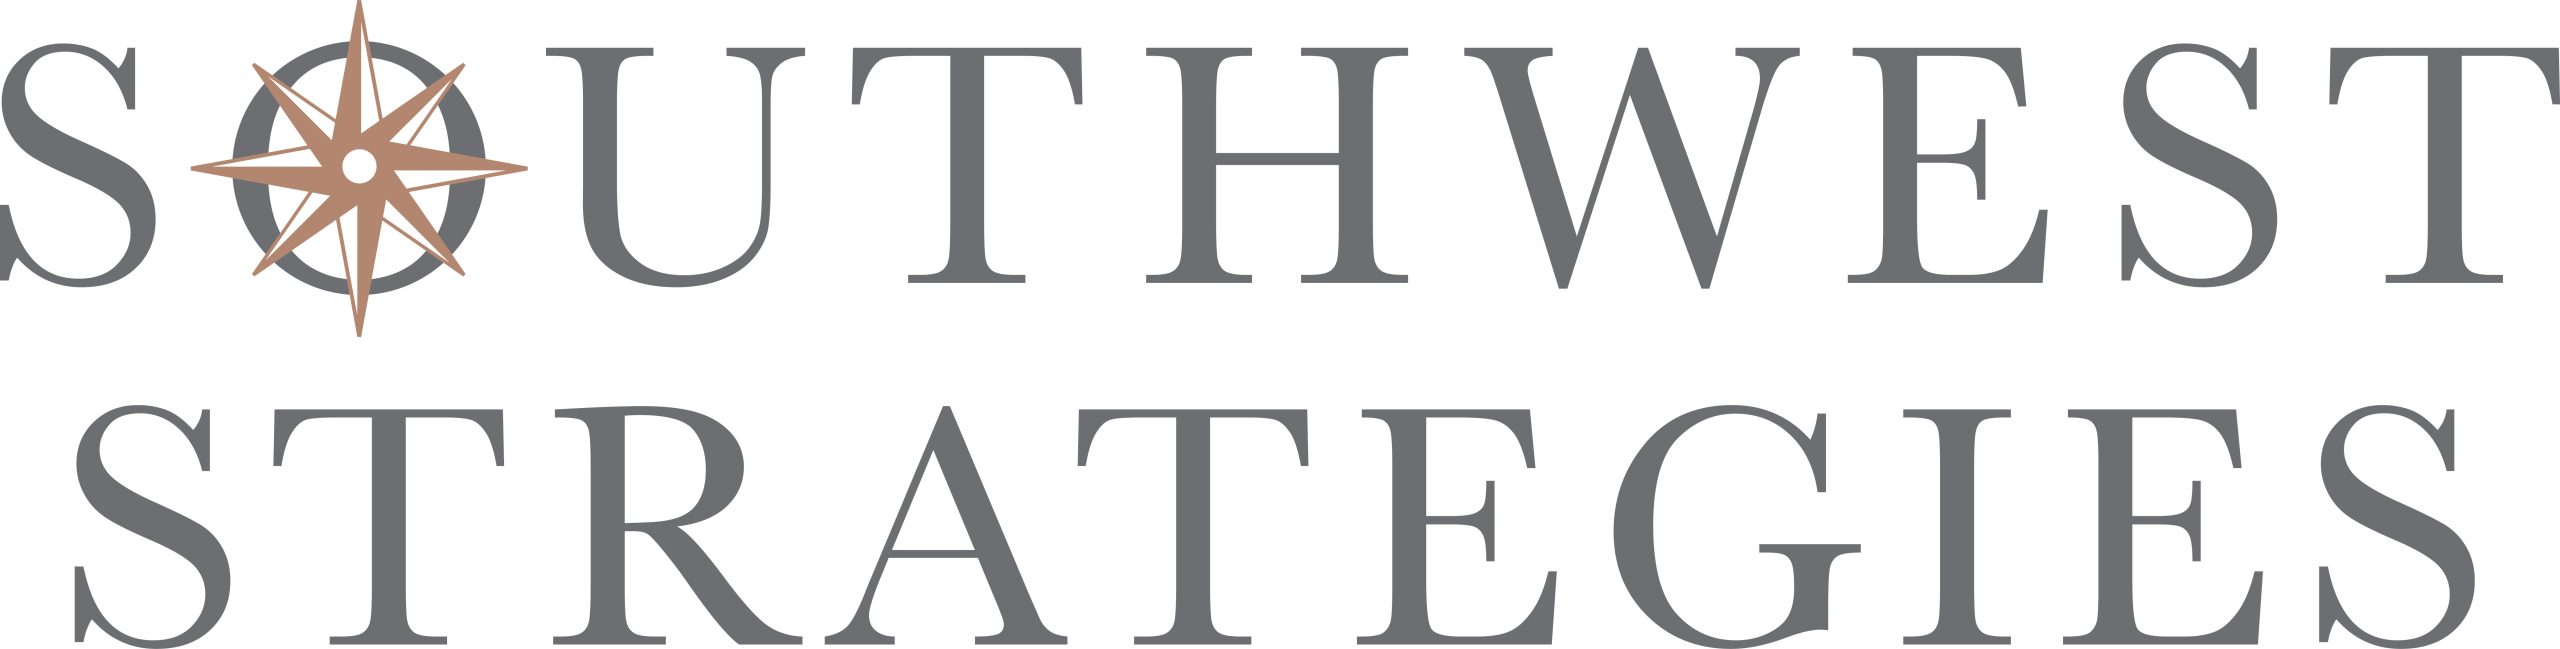 Southwest Strategies logo